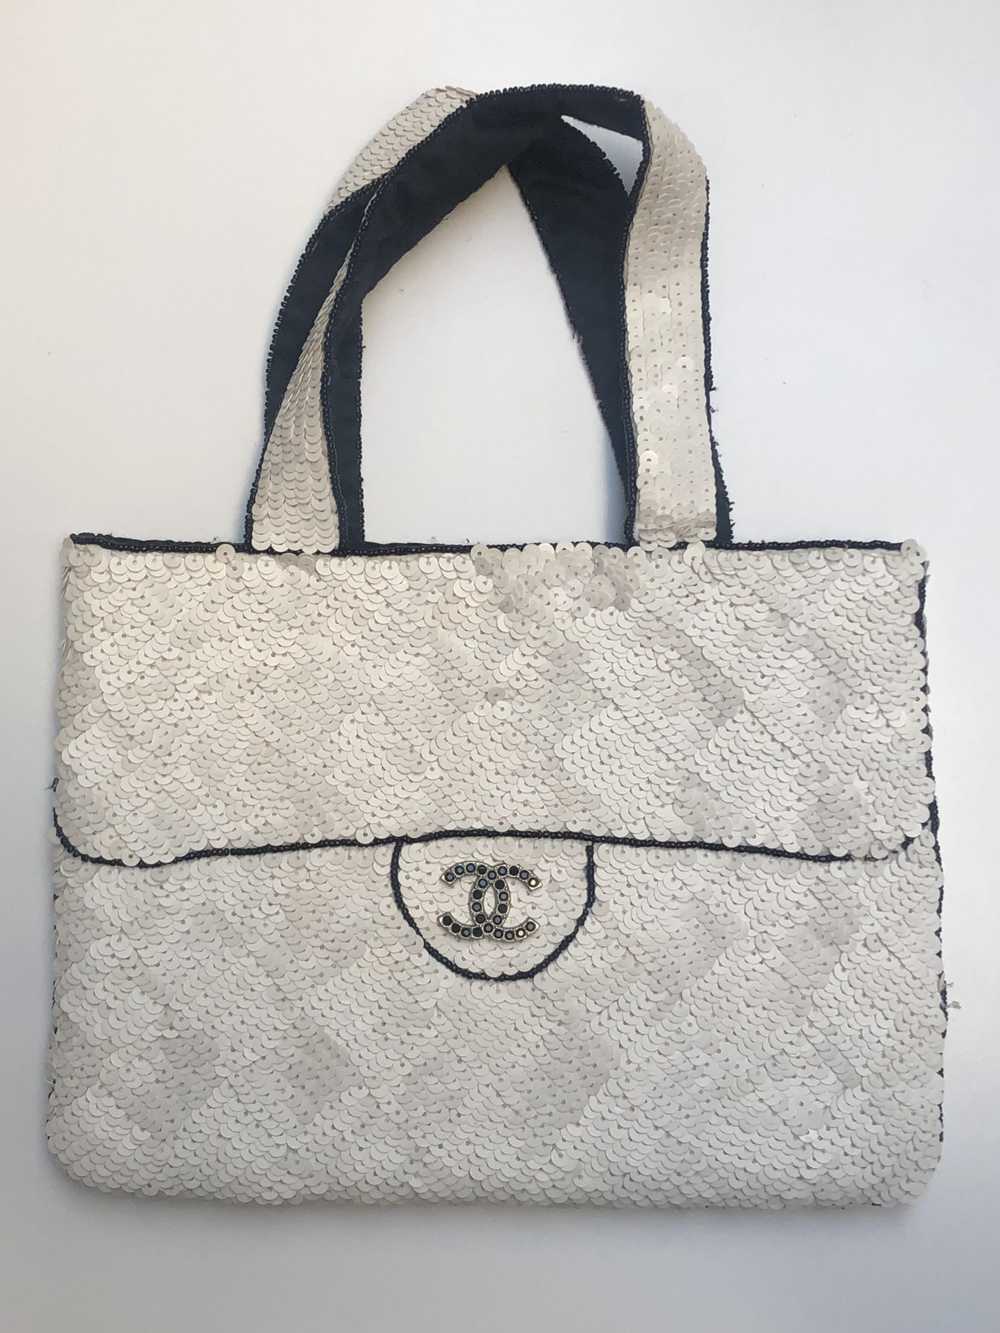 Chanel Chanel White Vintage CC Sequin Tote Bag - image 10